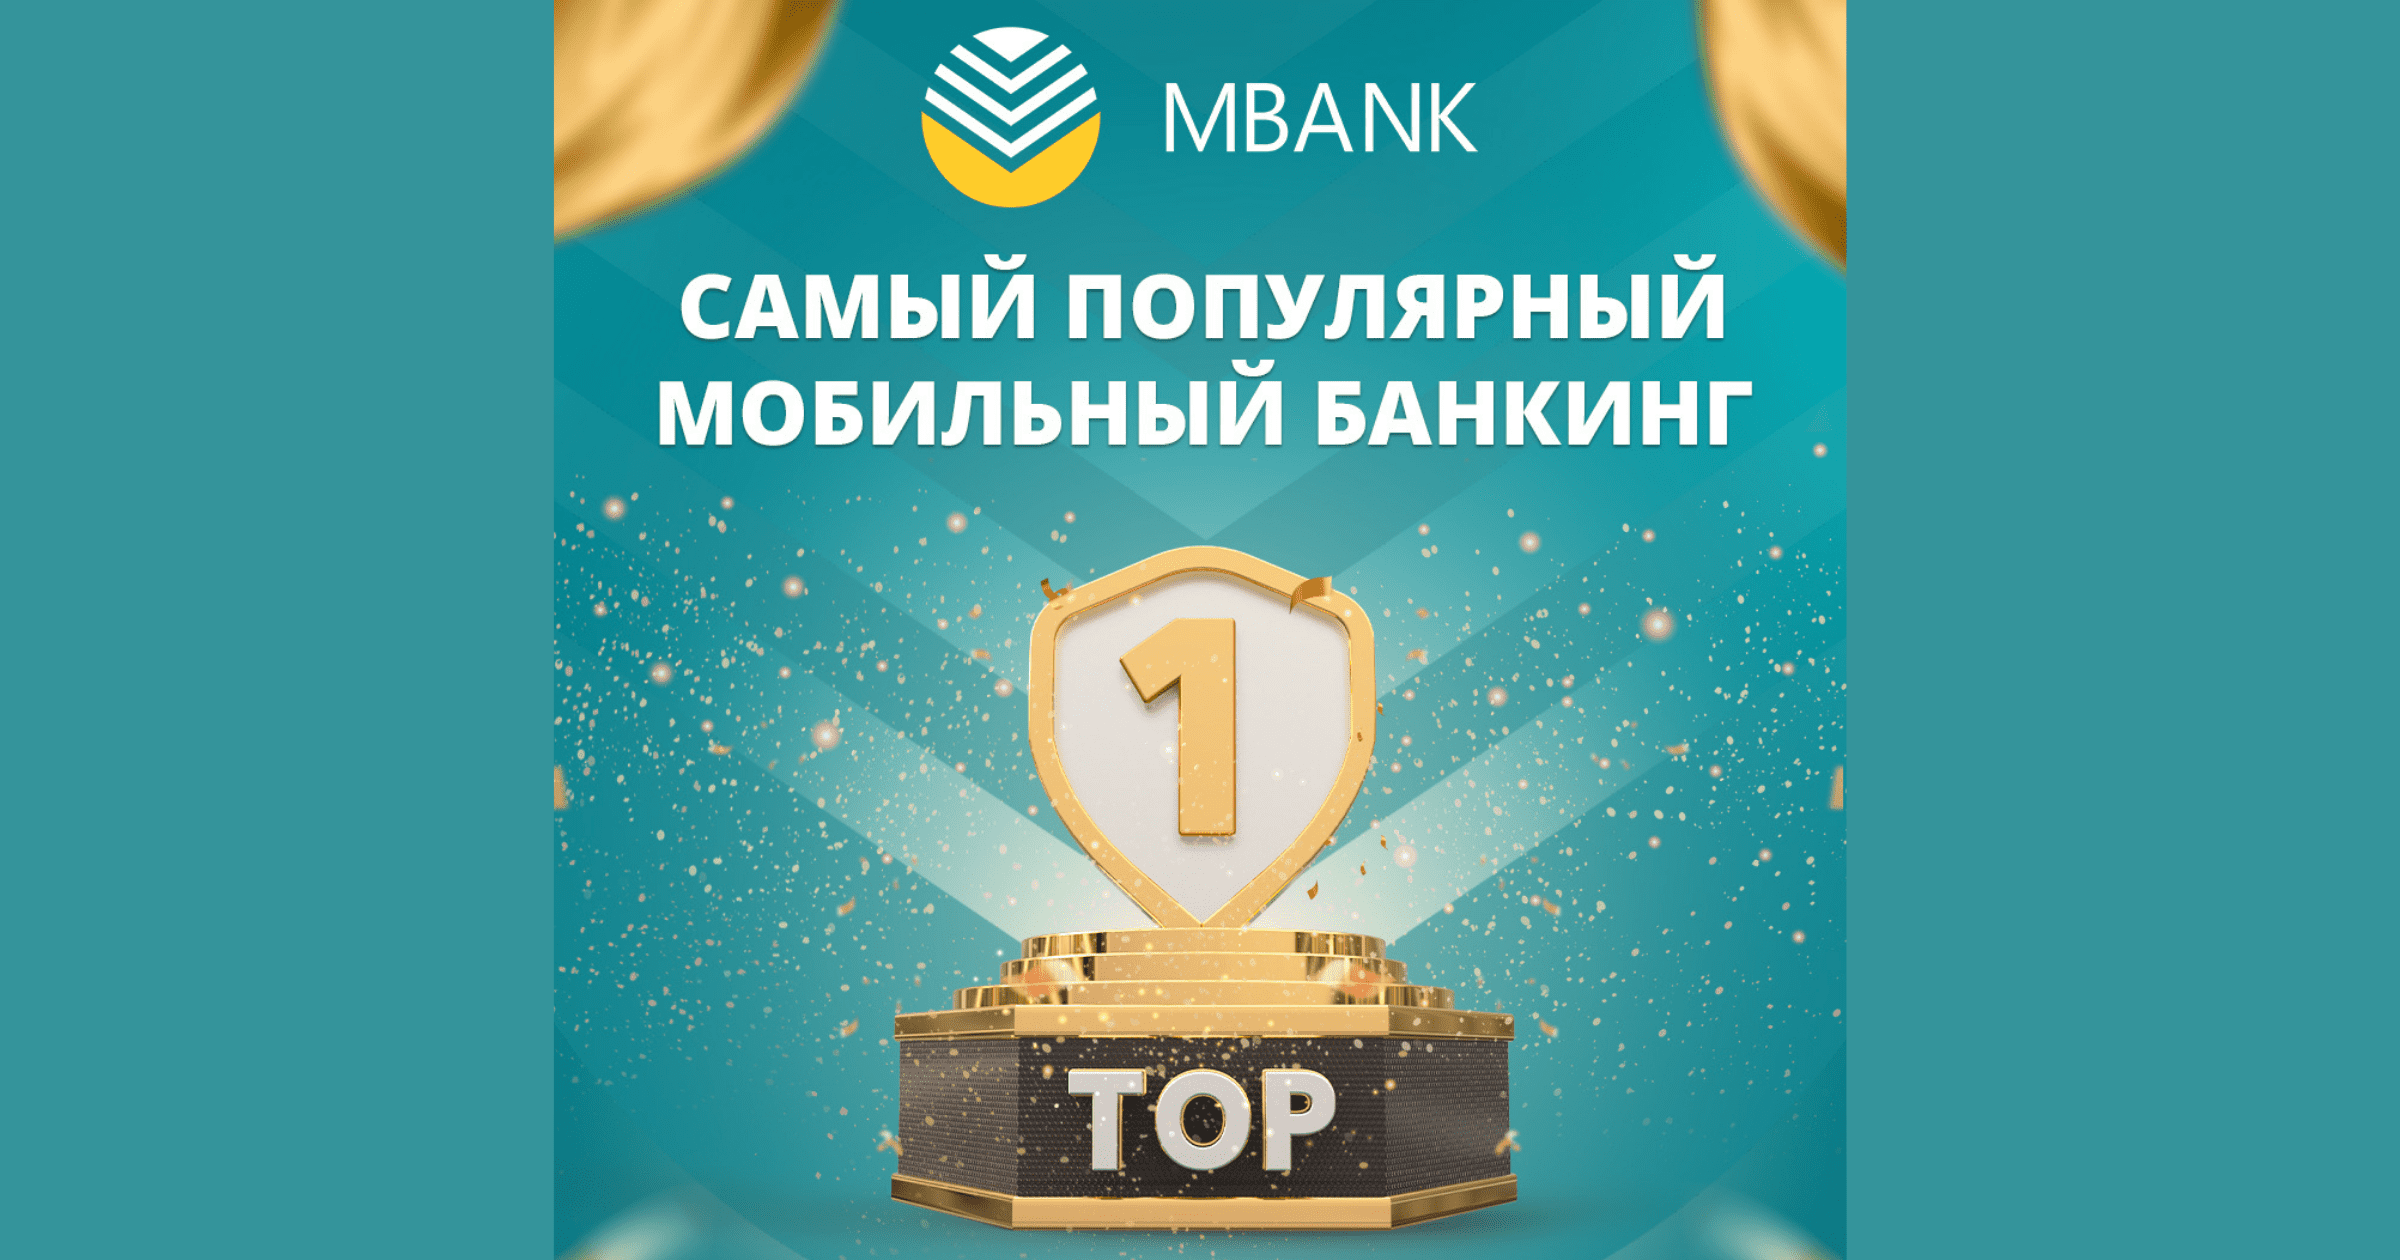 MBANK признан самым популярным в Кыргызстане